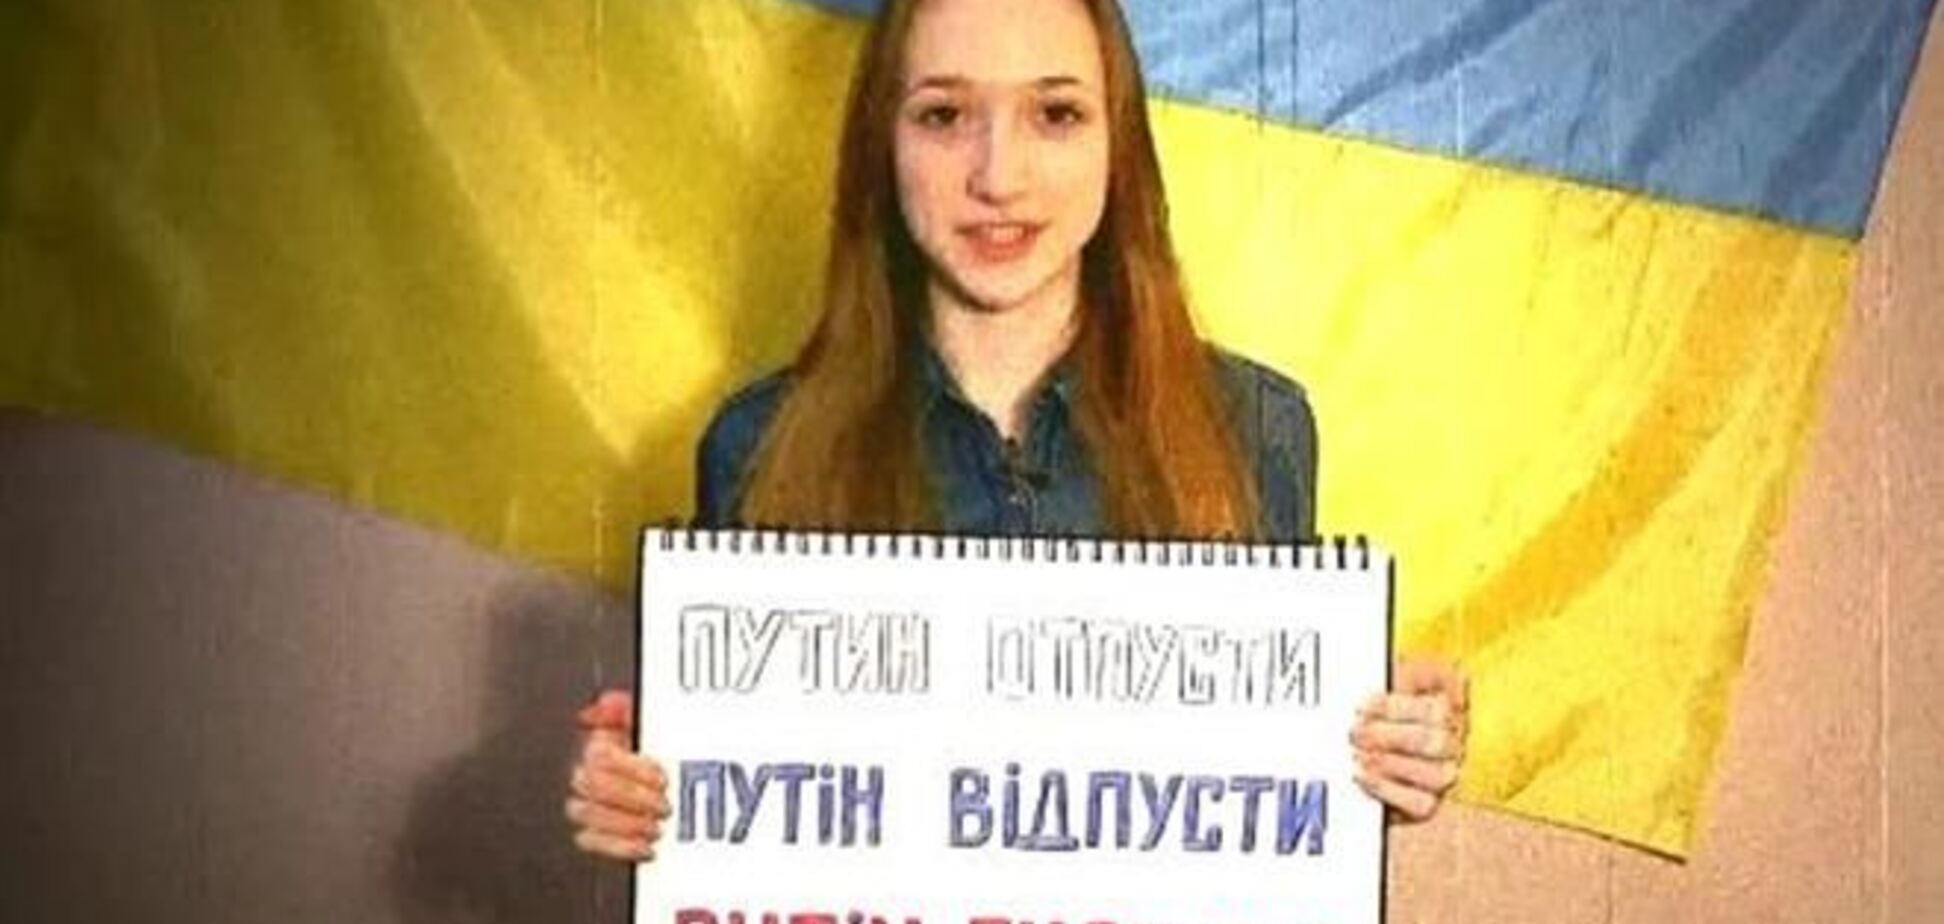 Жителі Донецька - Путіну: 'Putin f * ck off'